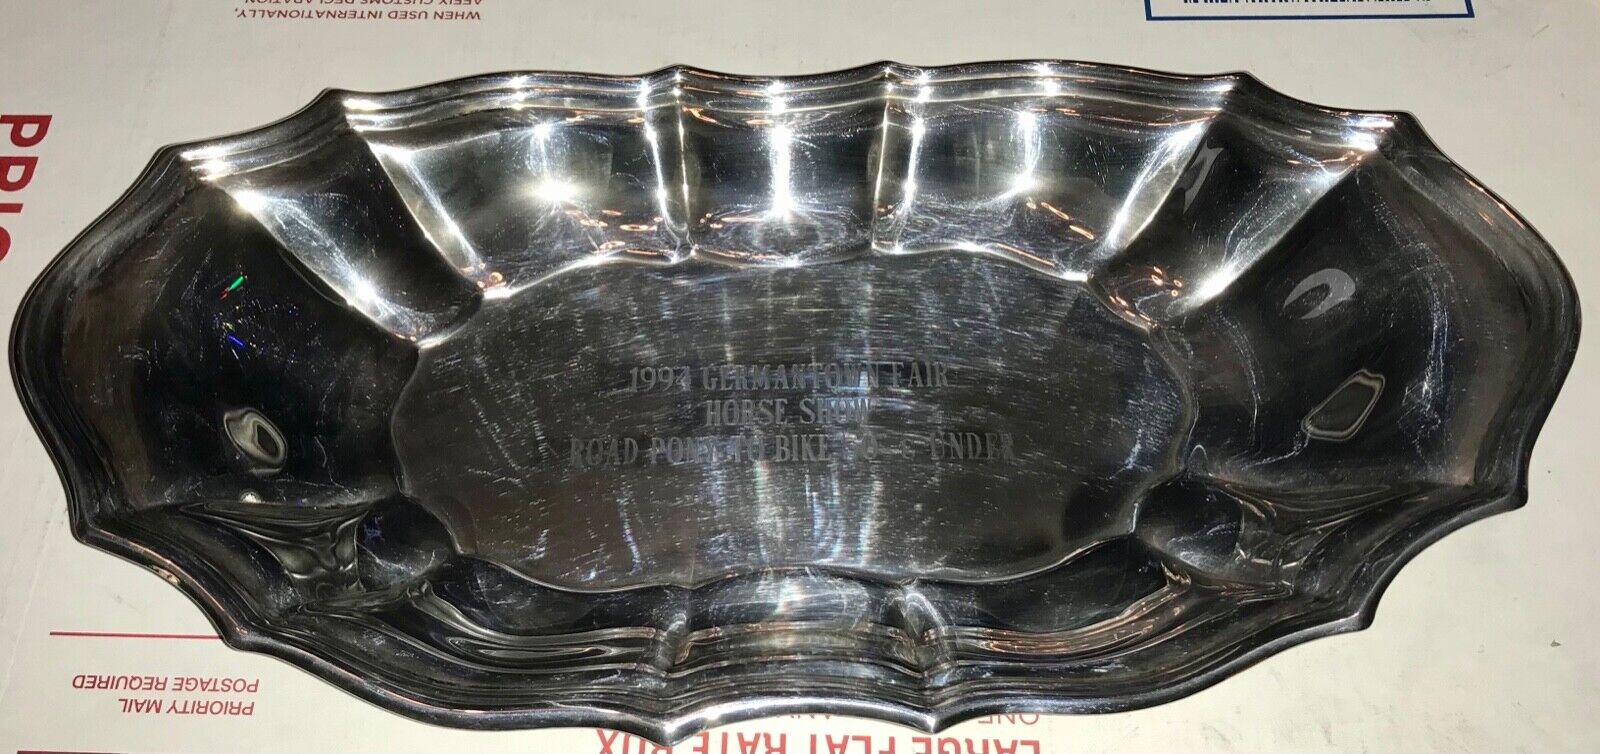 Vintage Silverplate 12” Award Serving Bowl Engraved 1994 Germantown Fair Horse